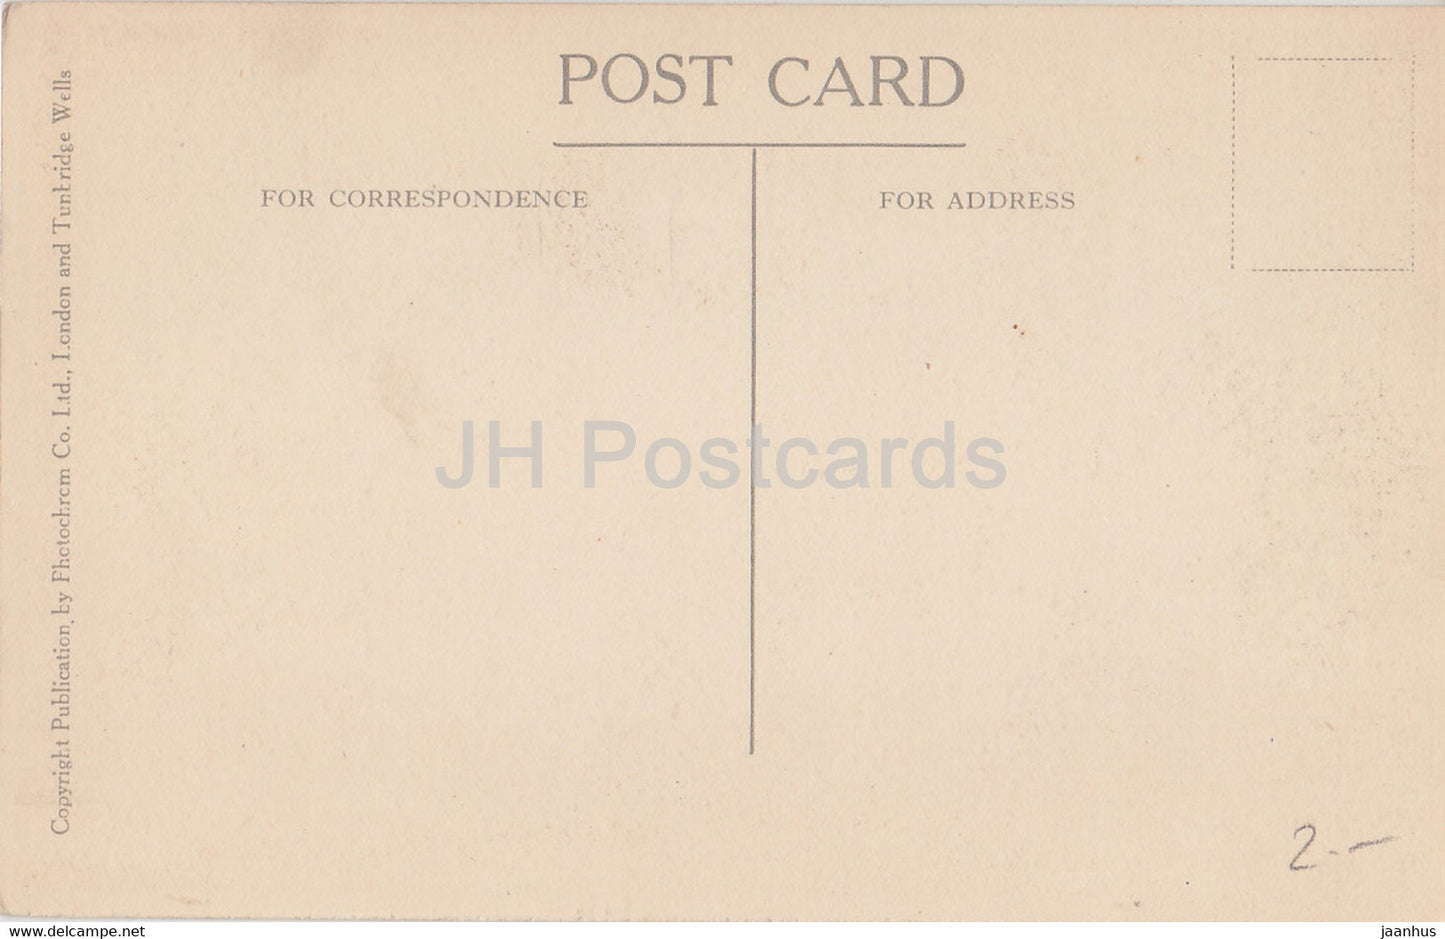 London - Westminster Abbey - High Altar - 64030 - old postcard - England - United Kingdom - unused